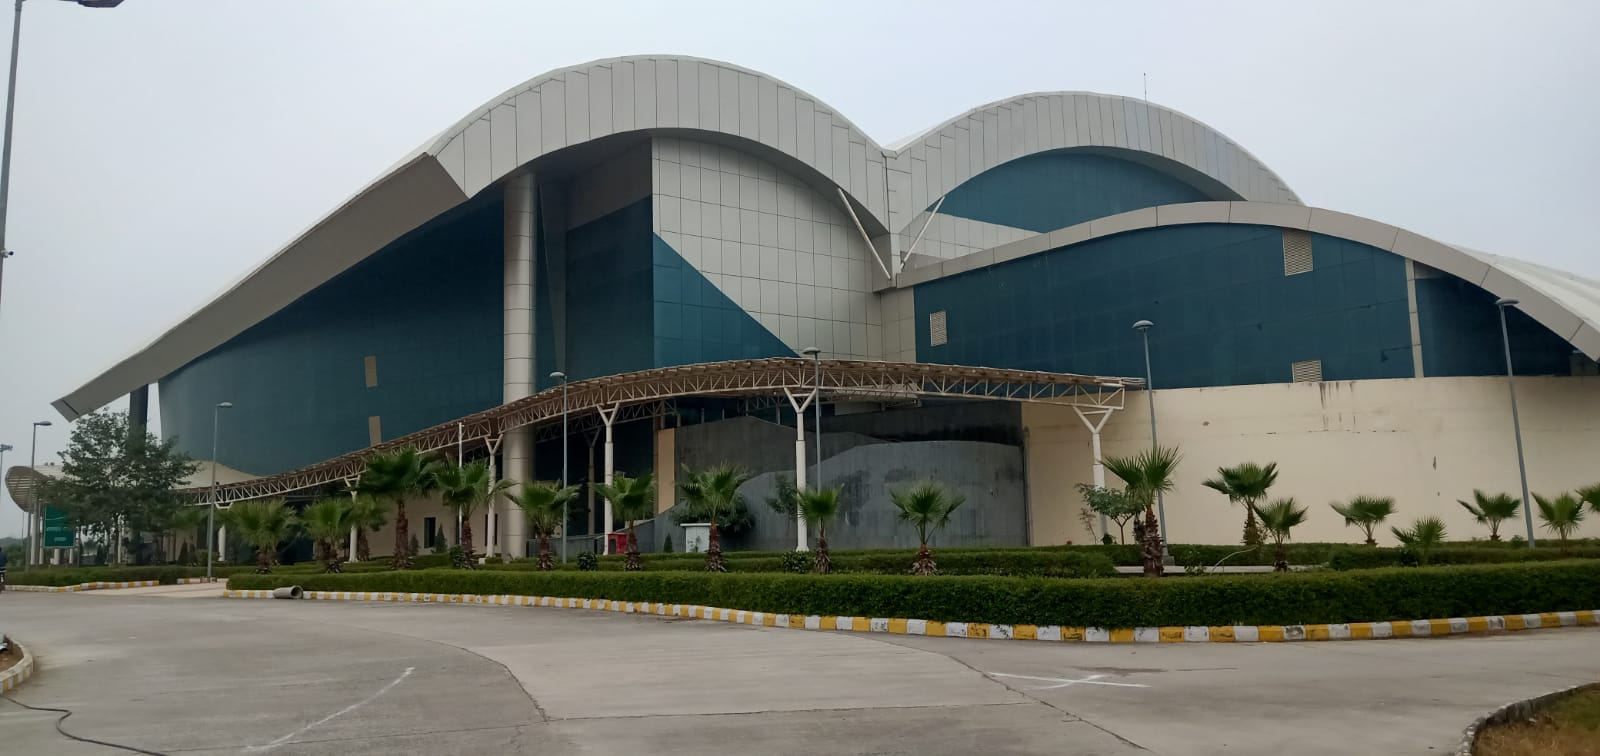 Major Dhyan Chand Sports College, Saifai